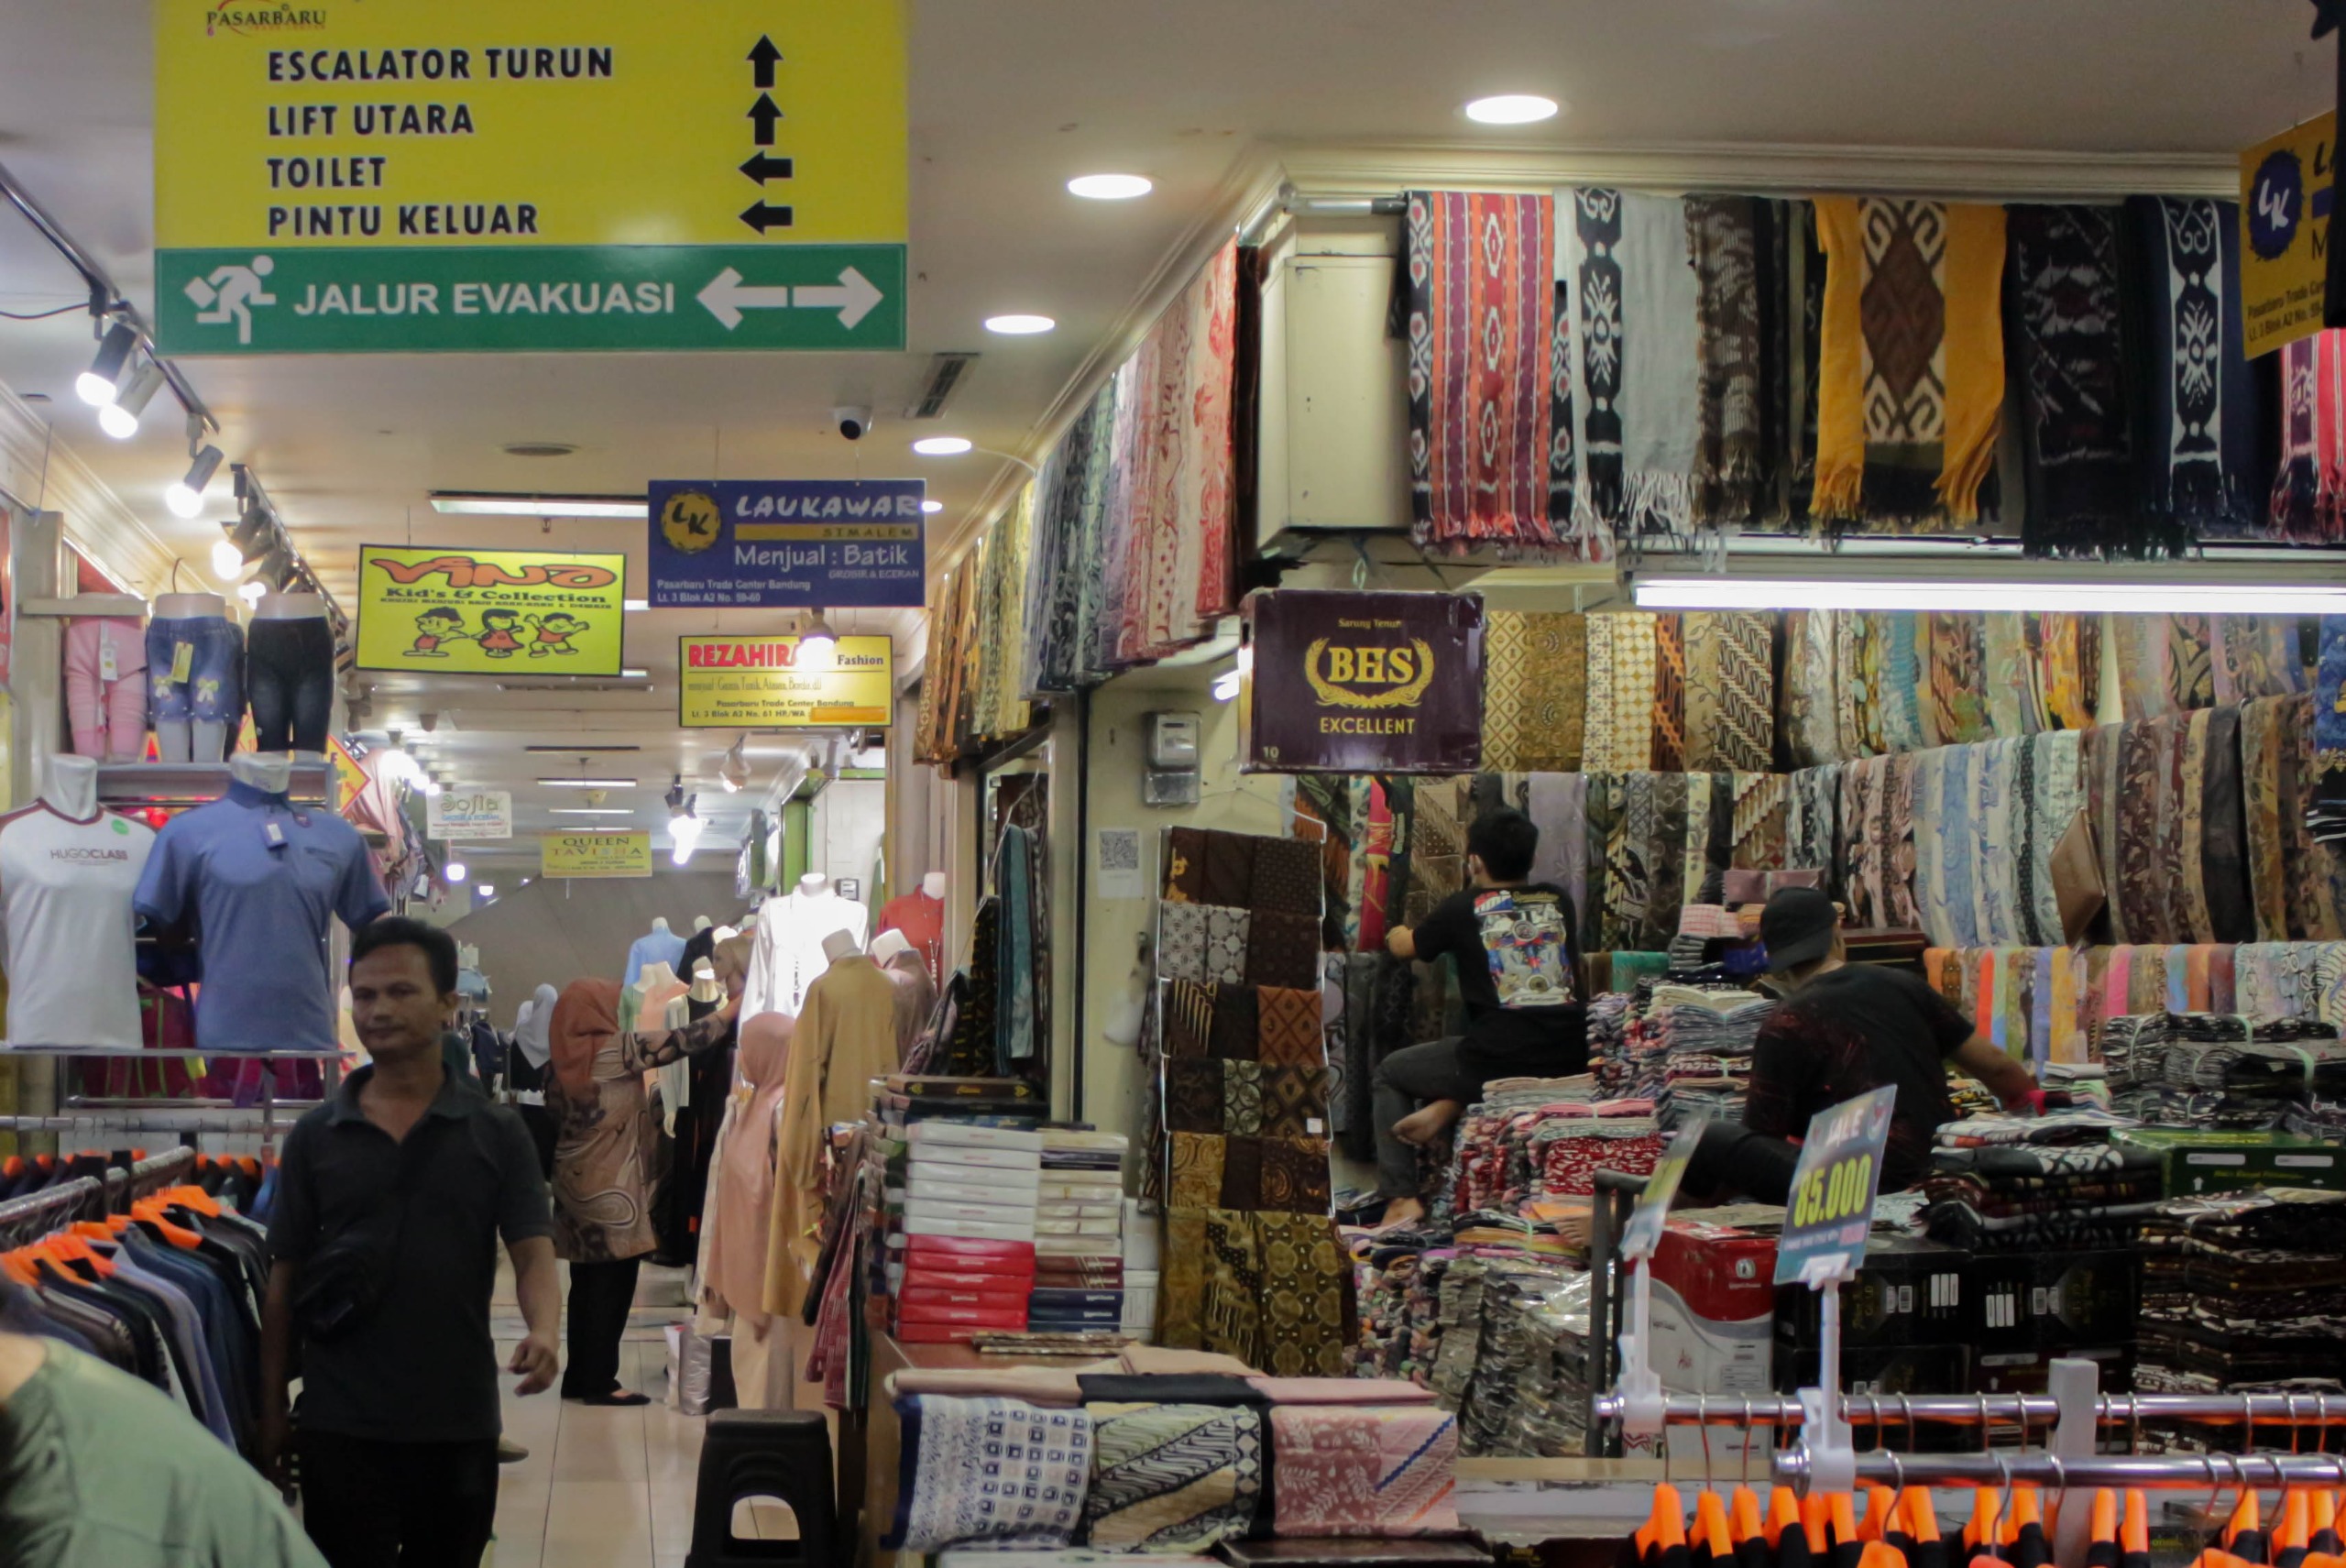 Jelang Lebaran, kenaikan omzet belum didapat sebagian pedagang Pasar Baru (Pandu Muslim / JE)